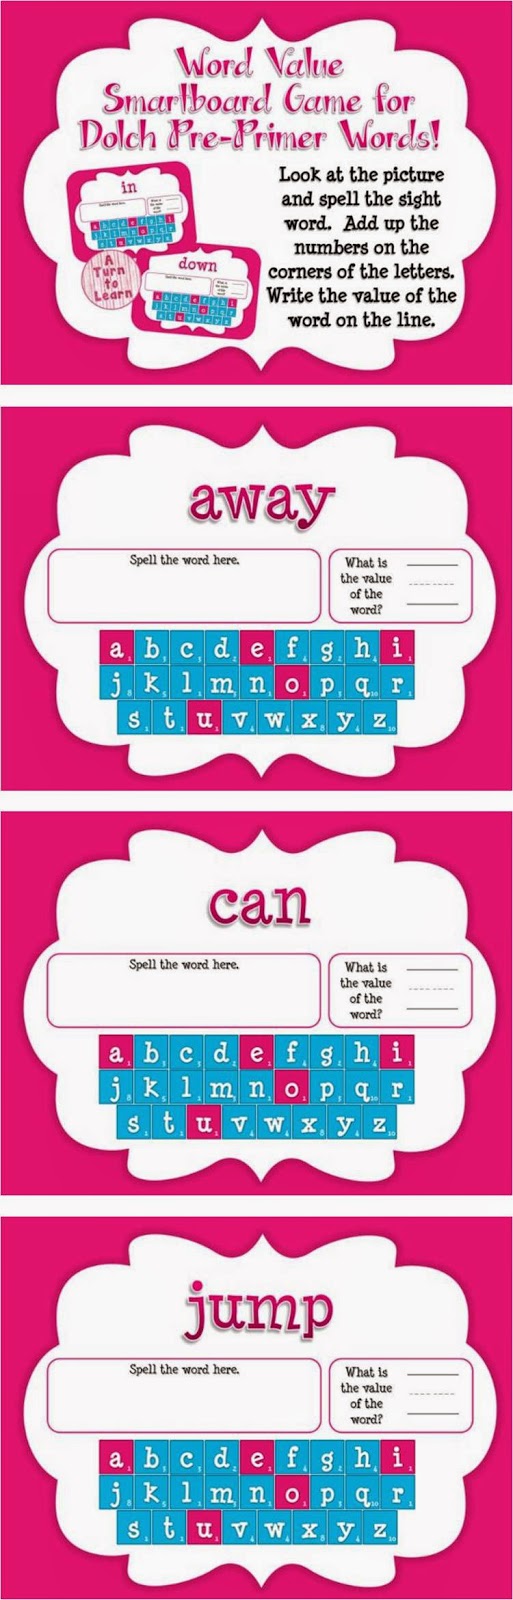 Word Value Game for Dolch Pre-Primer Words - Smartboard or Promethean Board! 